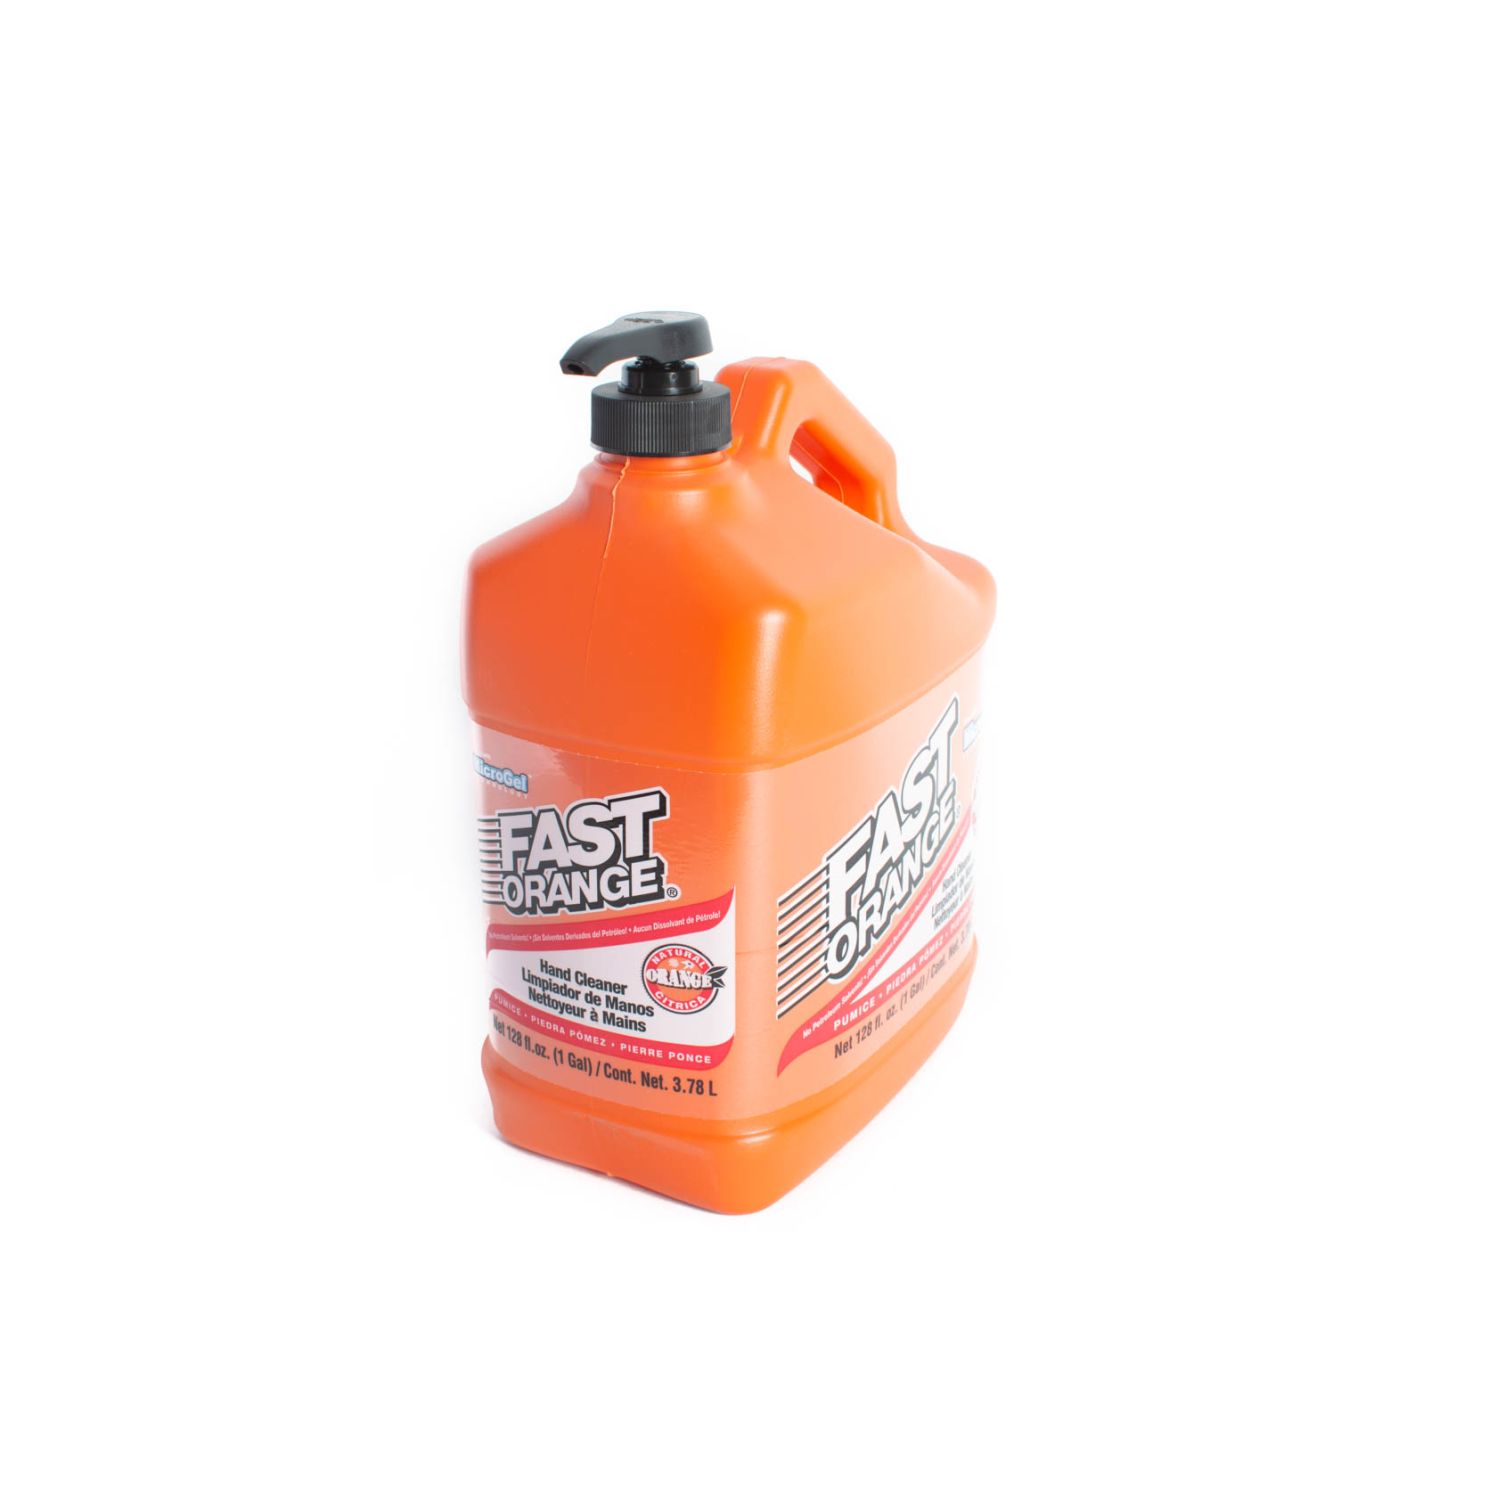 Permatex 1 gal. Fast Orange Pumice Cleaner 25219